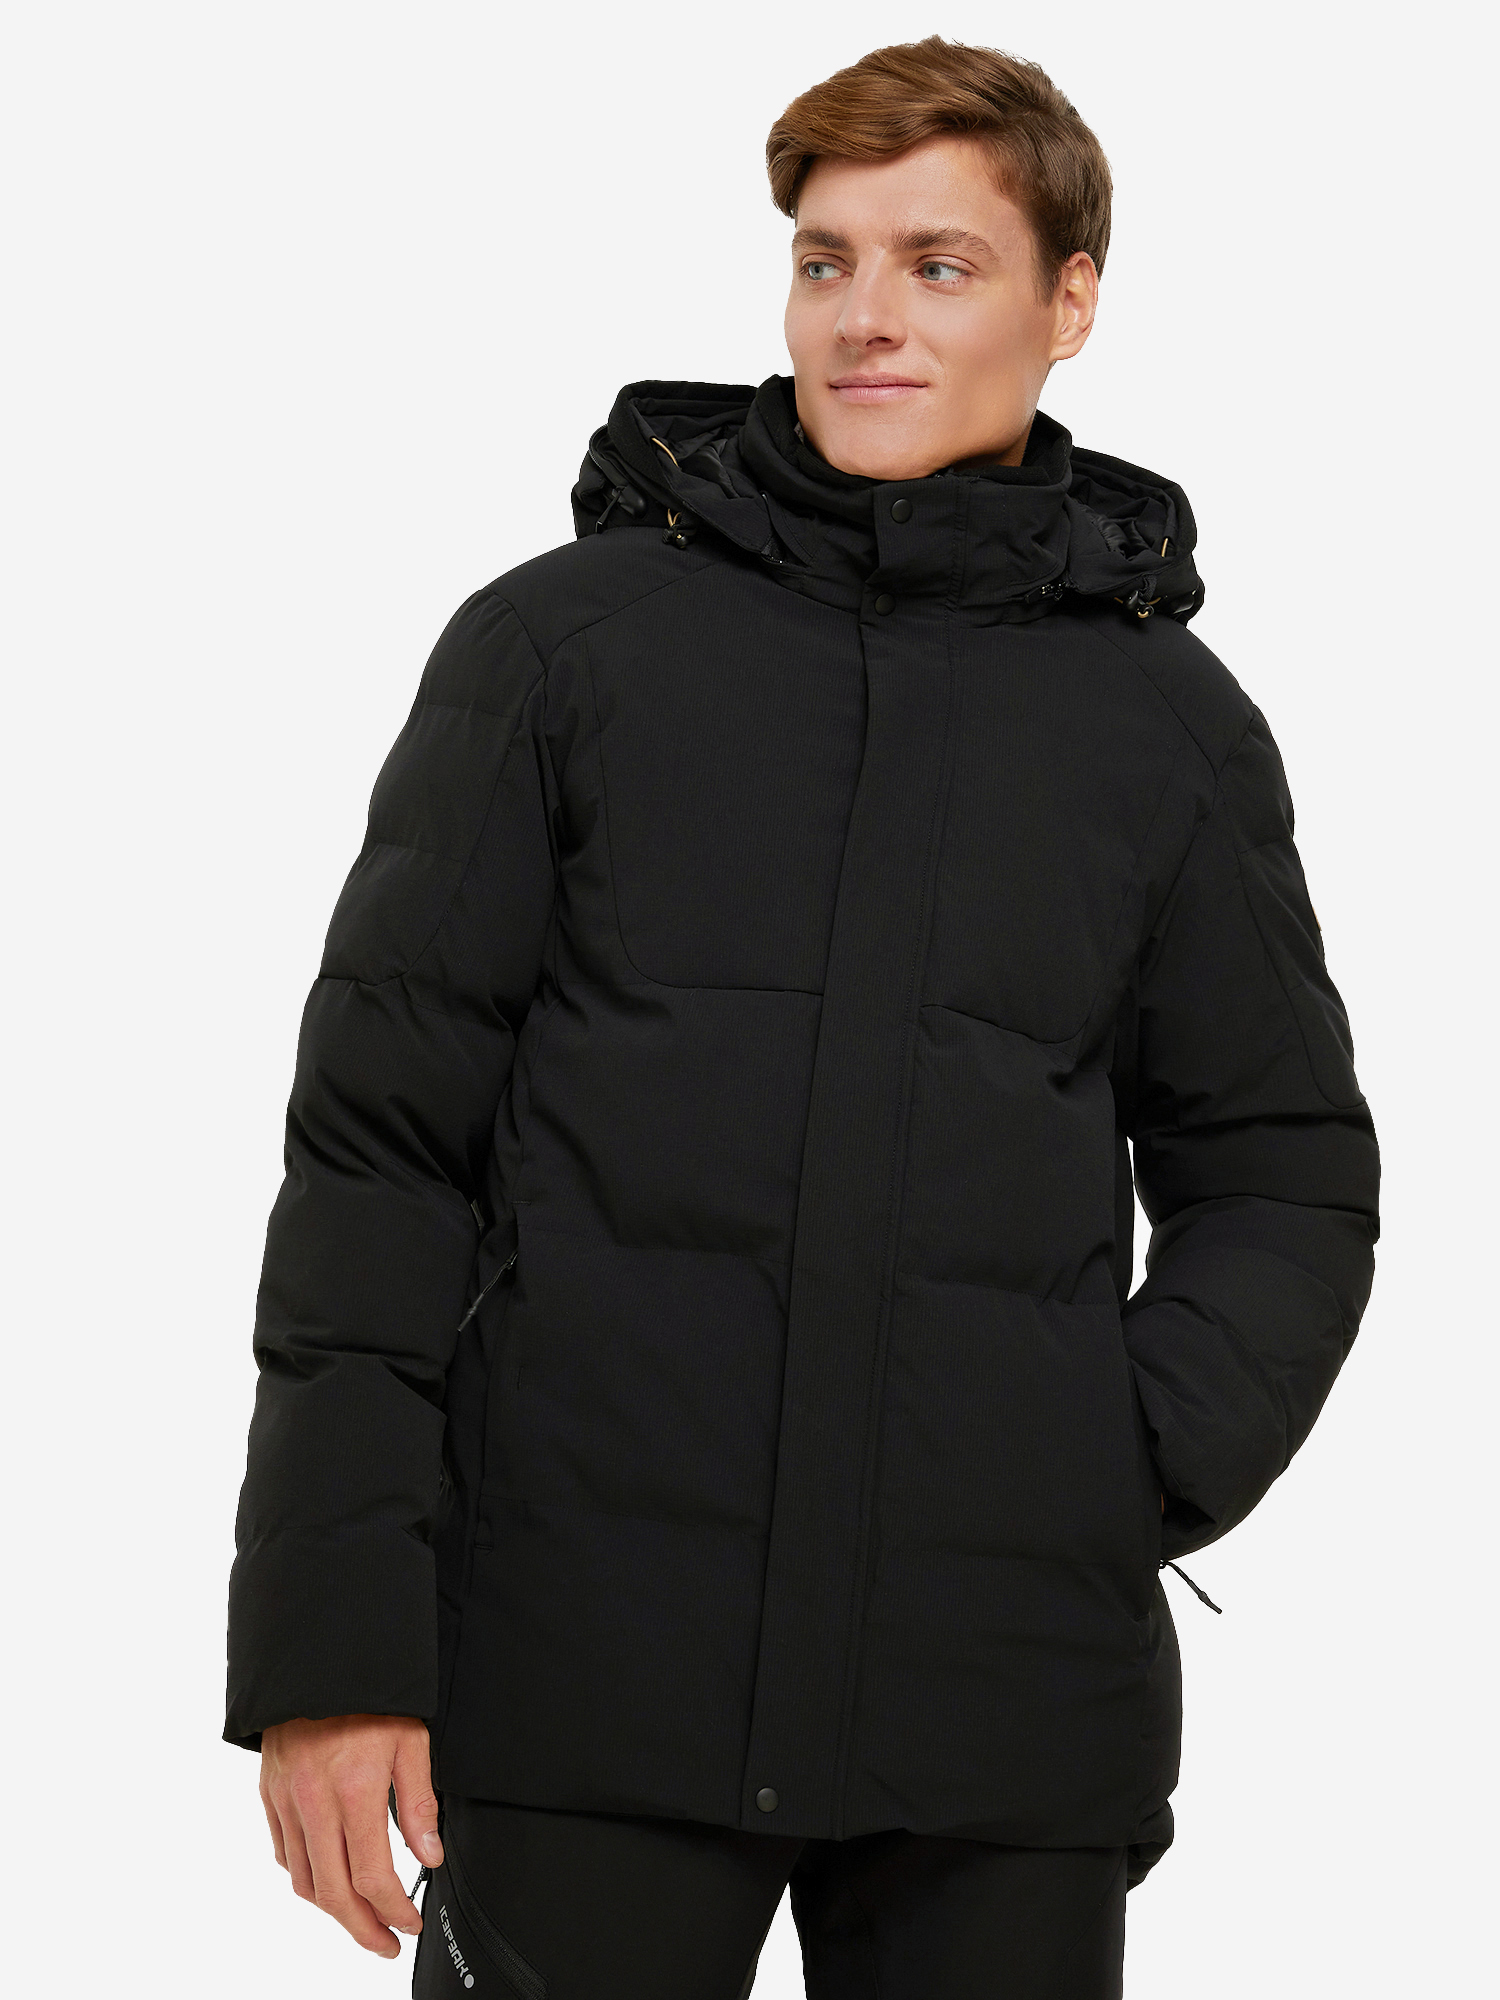 Куртка утепленная мужская IcePeak Bixby, Черный куртка утепленная мужская icepeak edgerton белый